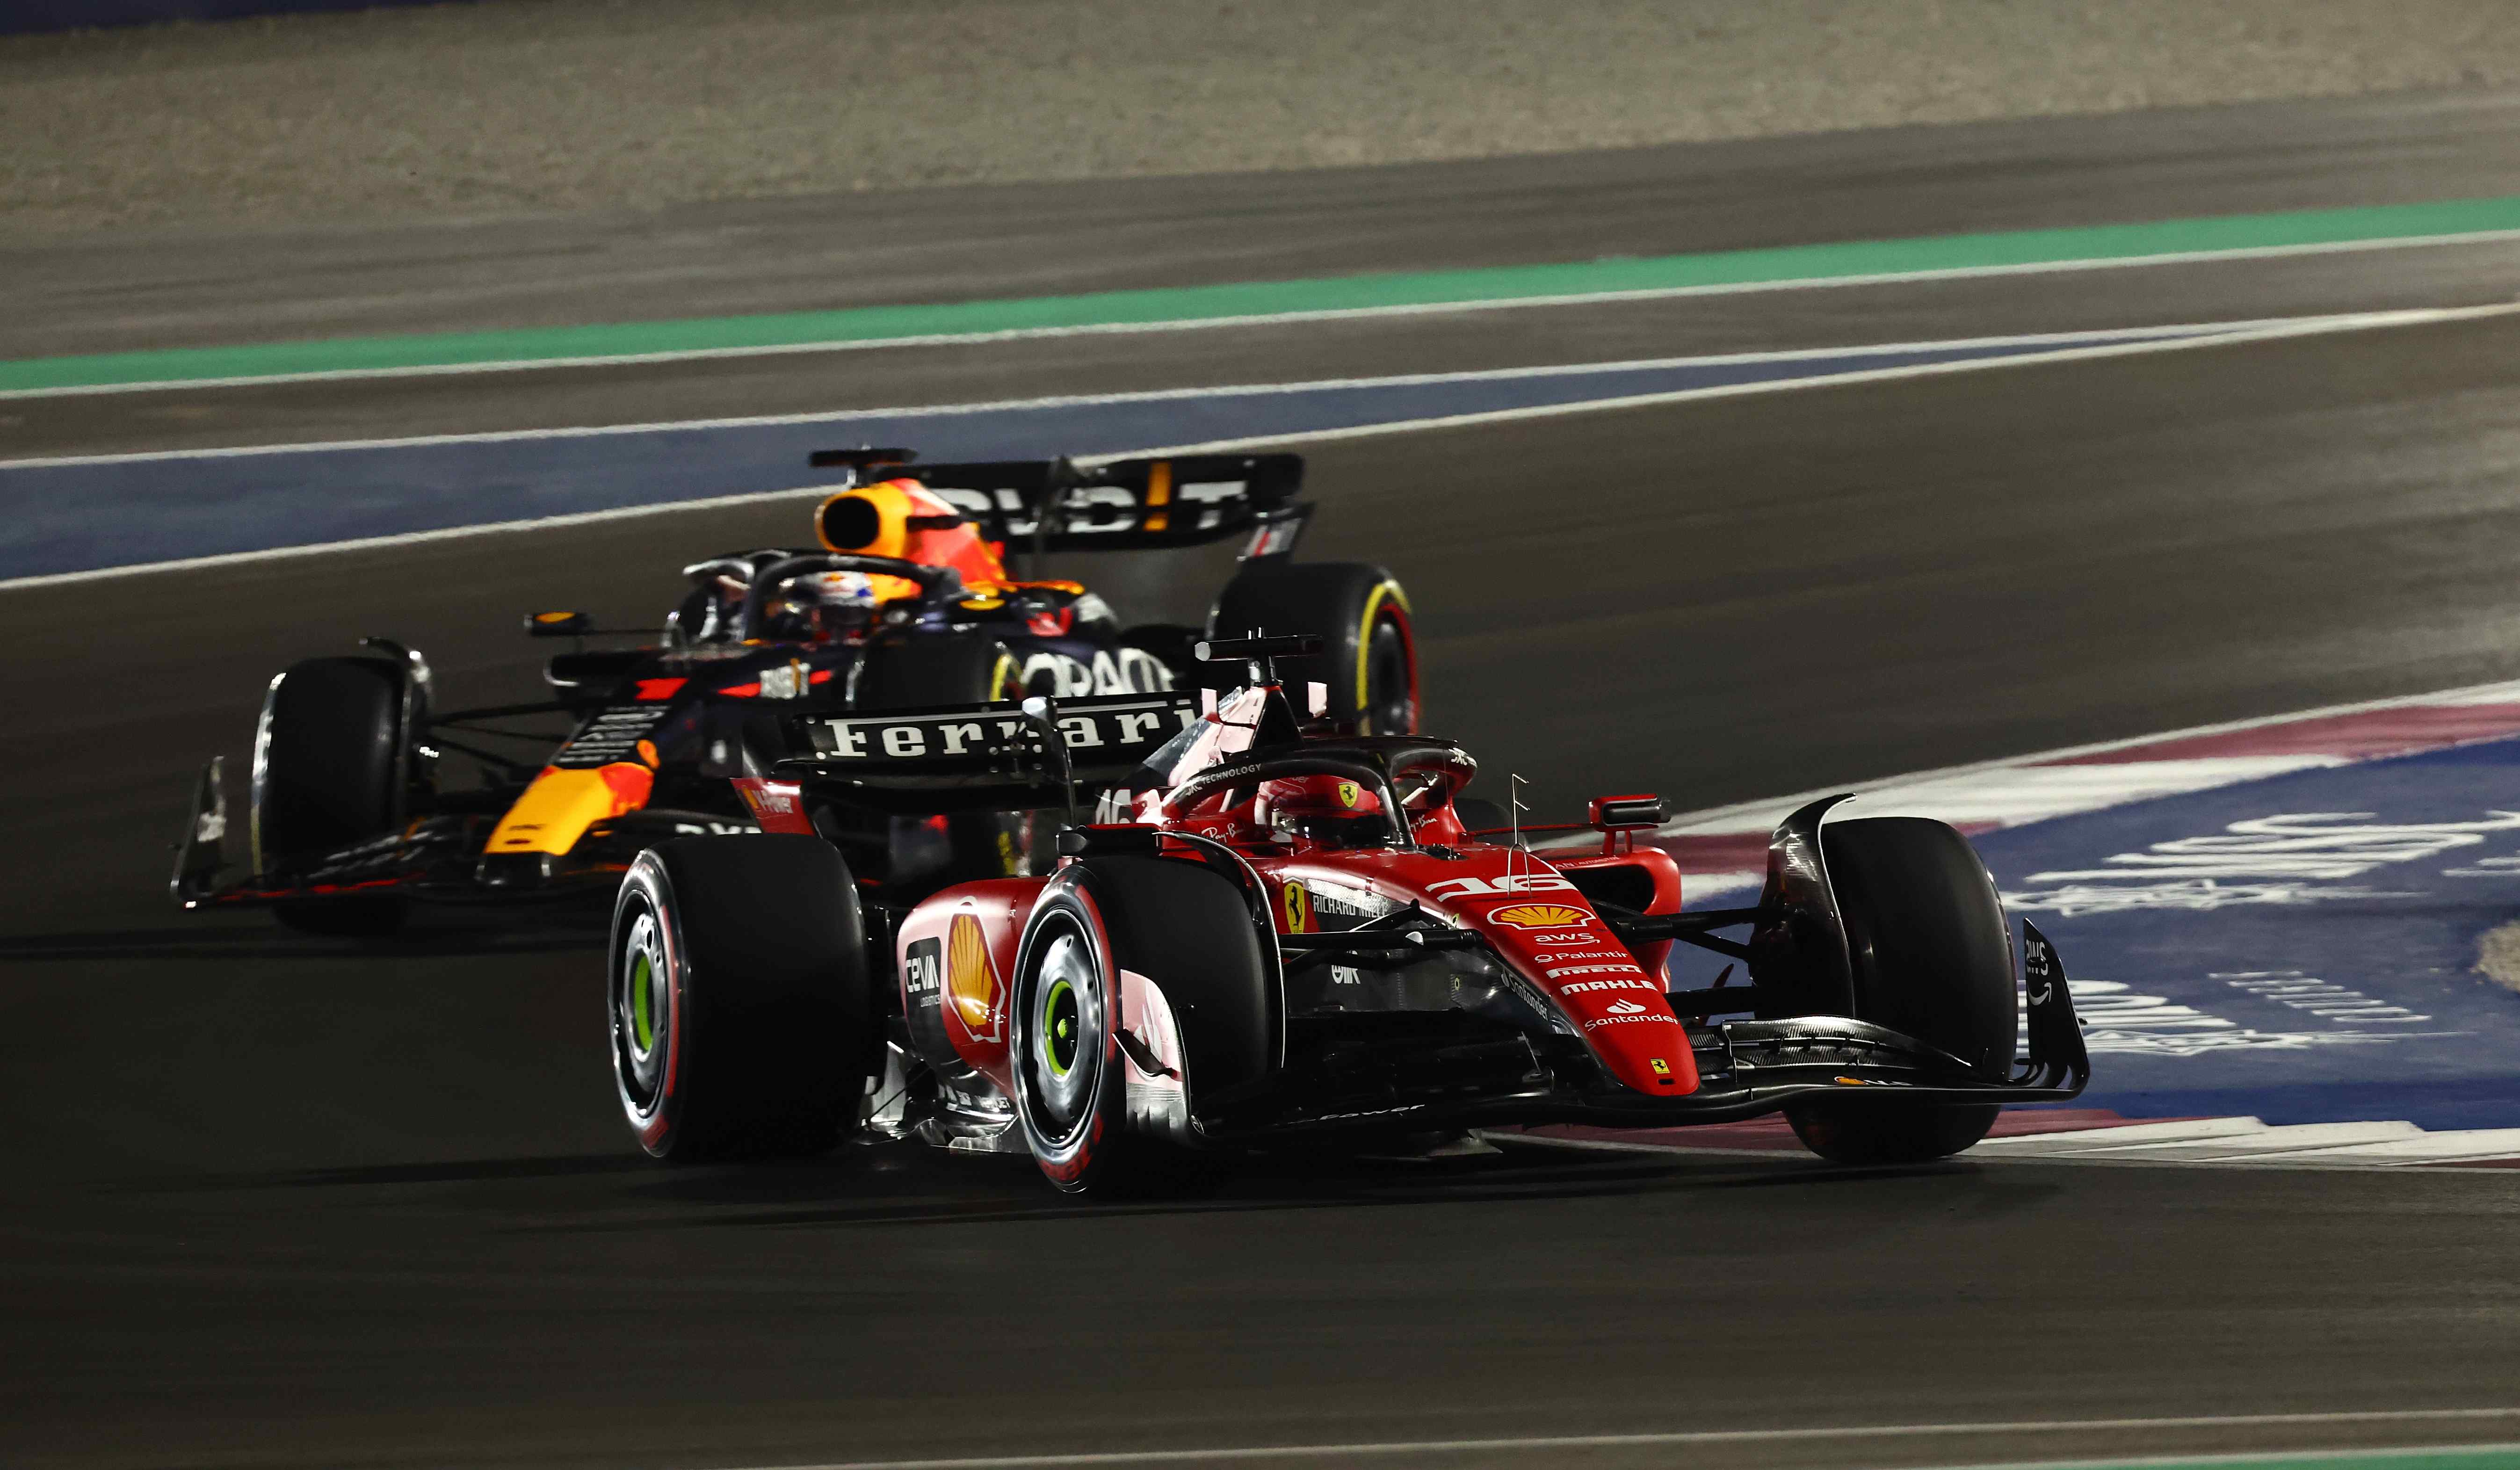 Scuderia Ferrari F1 Driver Charles Leclerc Number of Days left till Gt7  (The wait is killing me) : r/granturismo